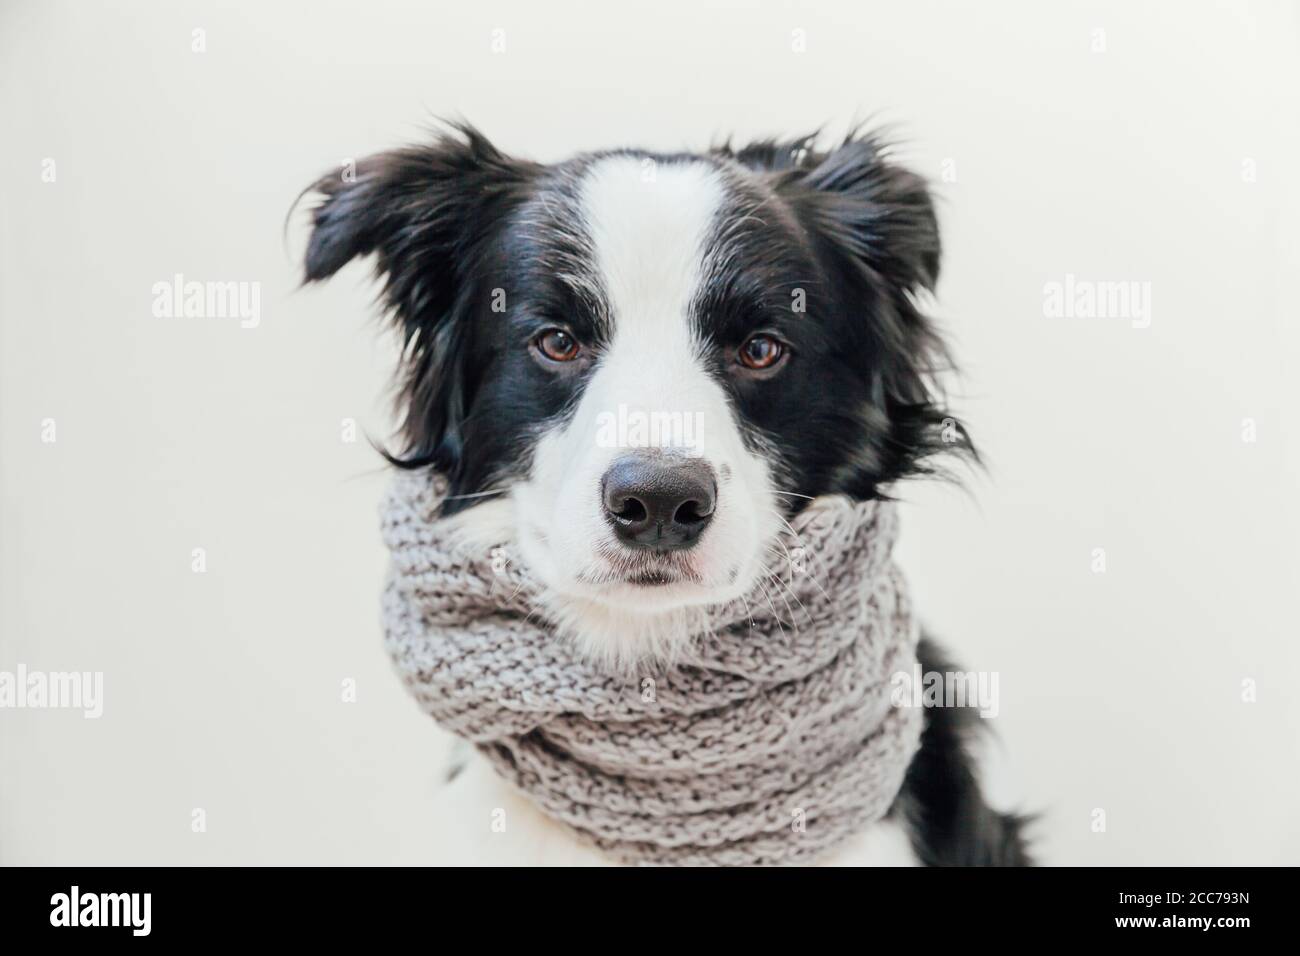 Funny Studio Portrait Of Cute Smilling Puppy Dog Border Collie